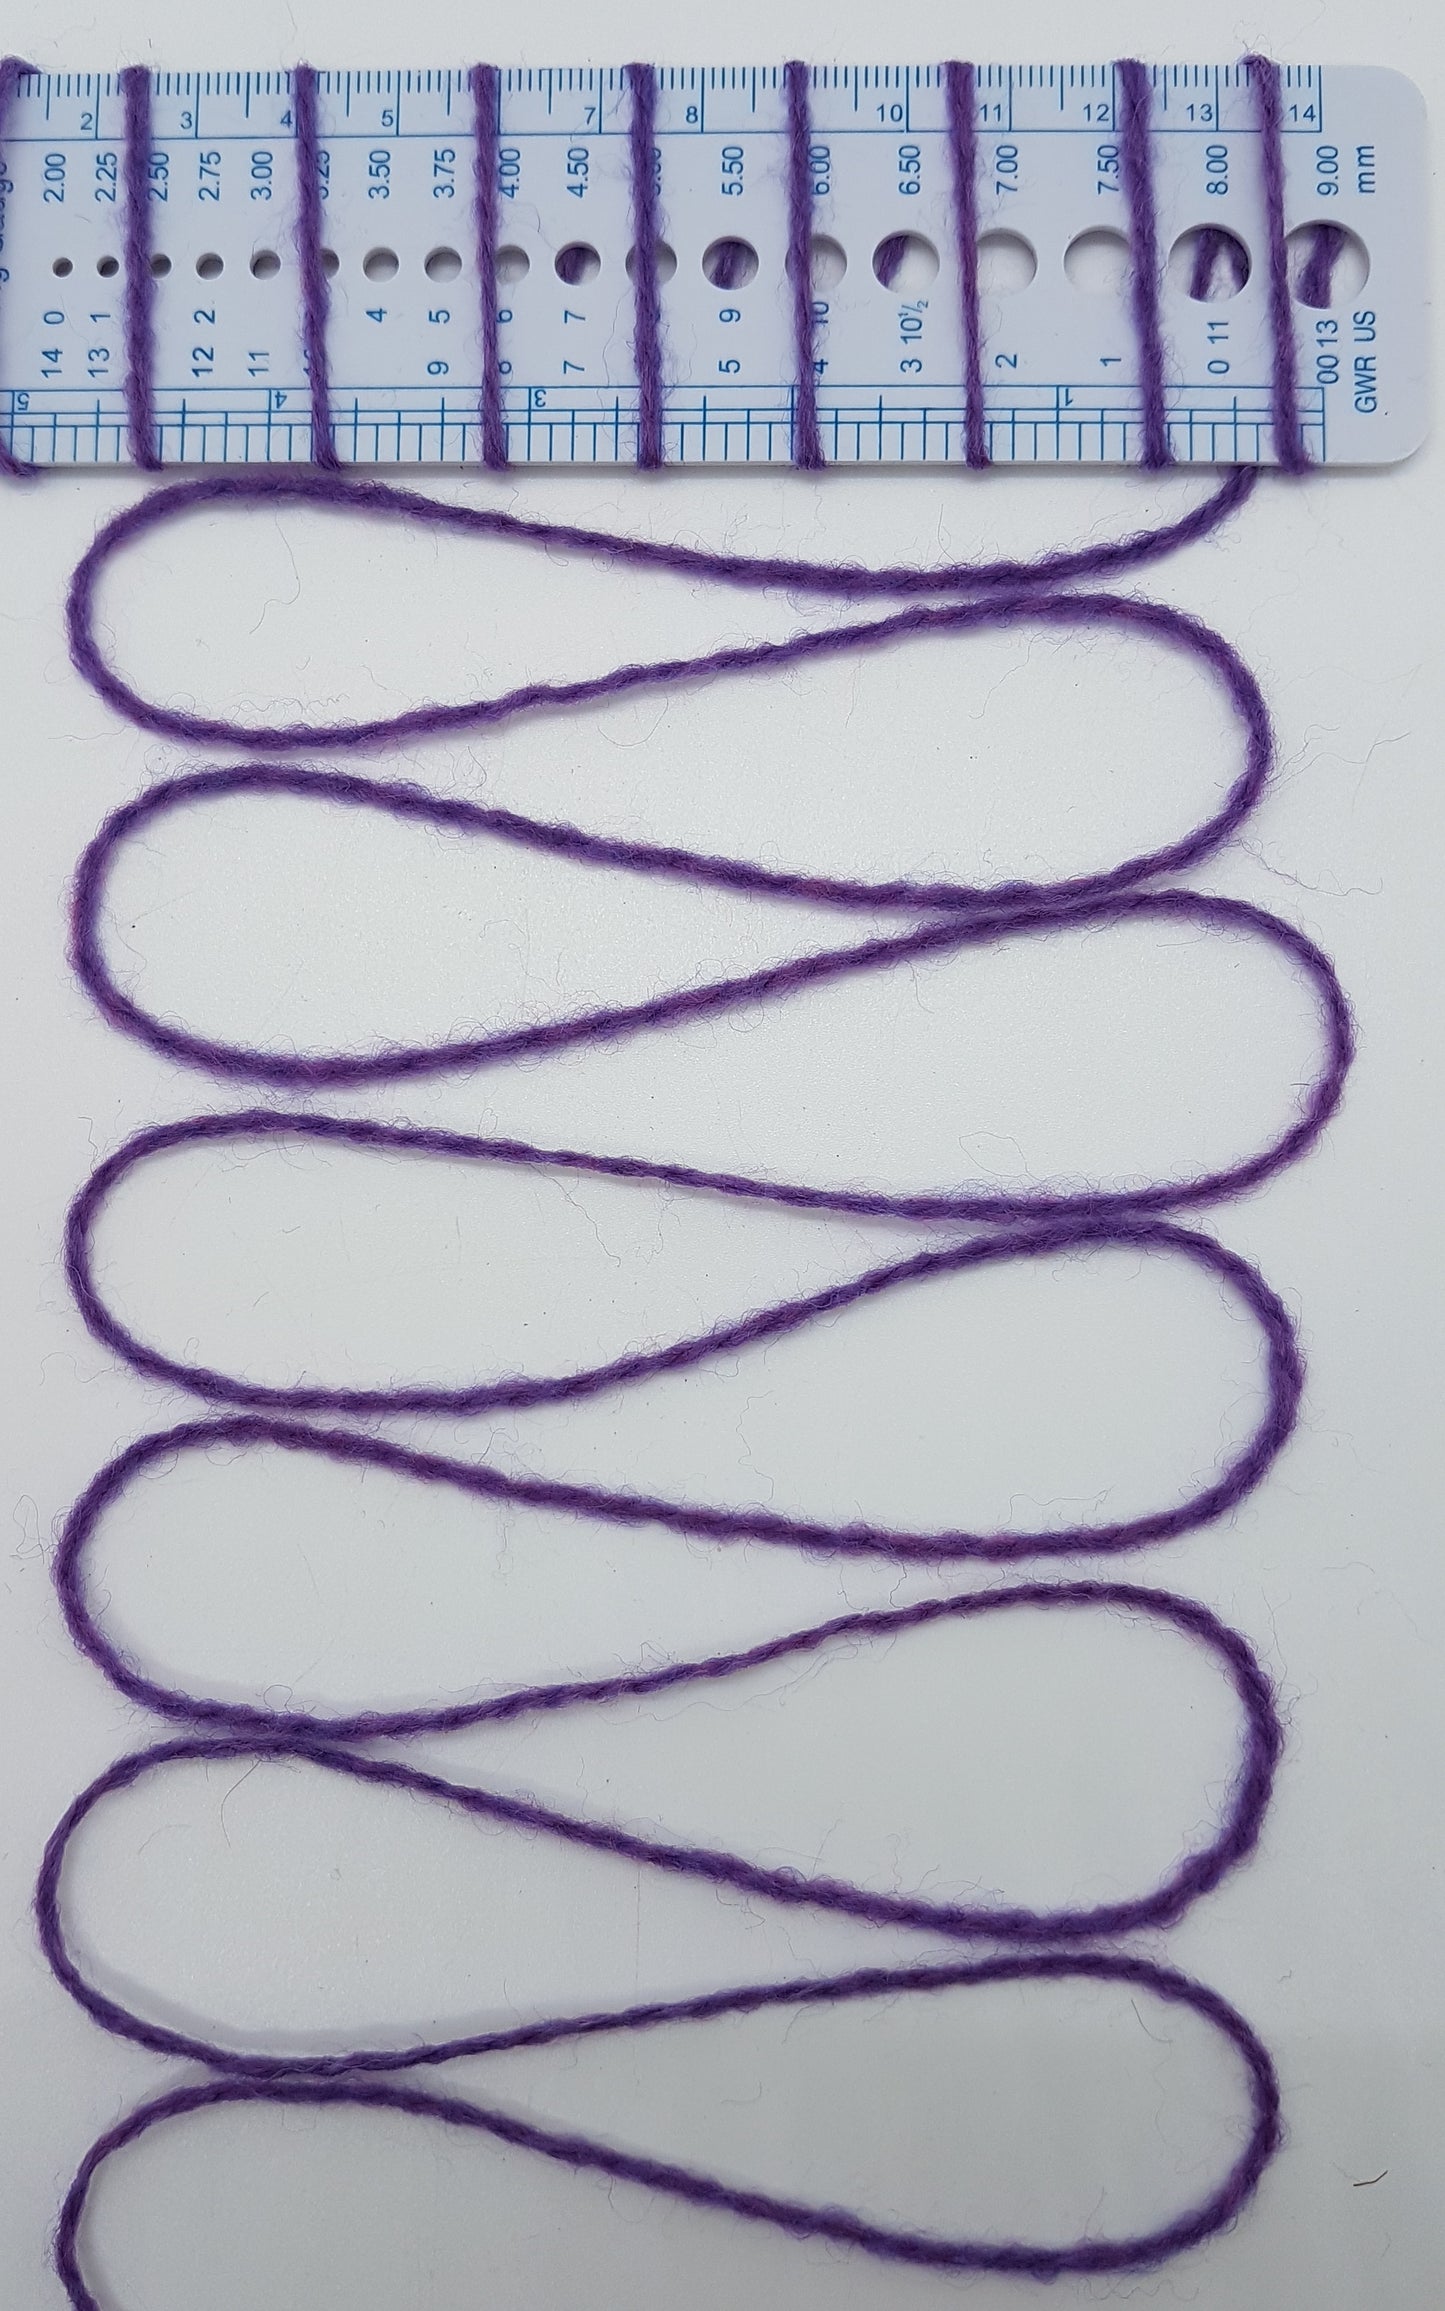 100g acrylic wool Italian yarn Italian purple color mélange N.319